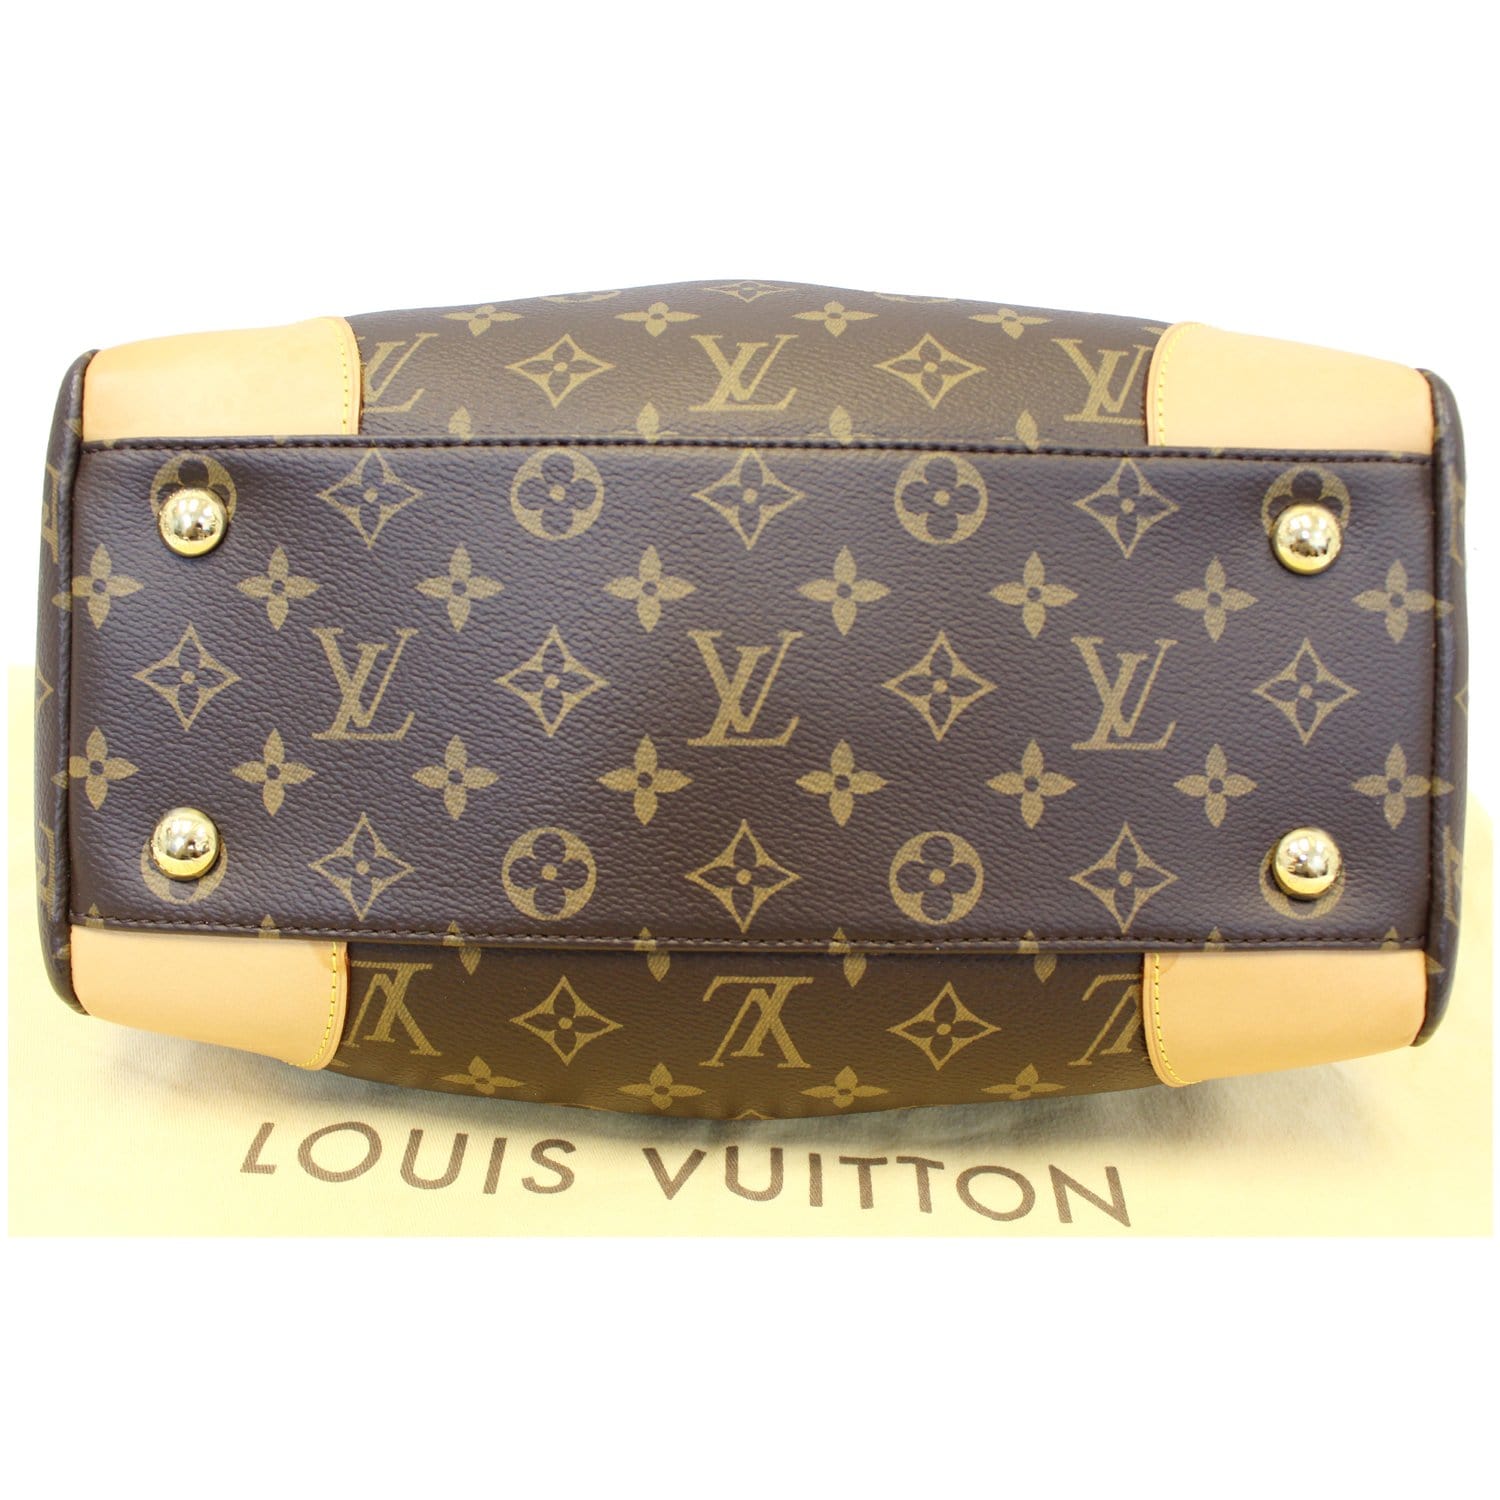 Authentic Louis Vuitton Segur bag for Sale in Danville, CA - OfferUp